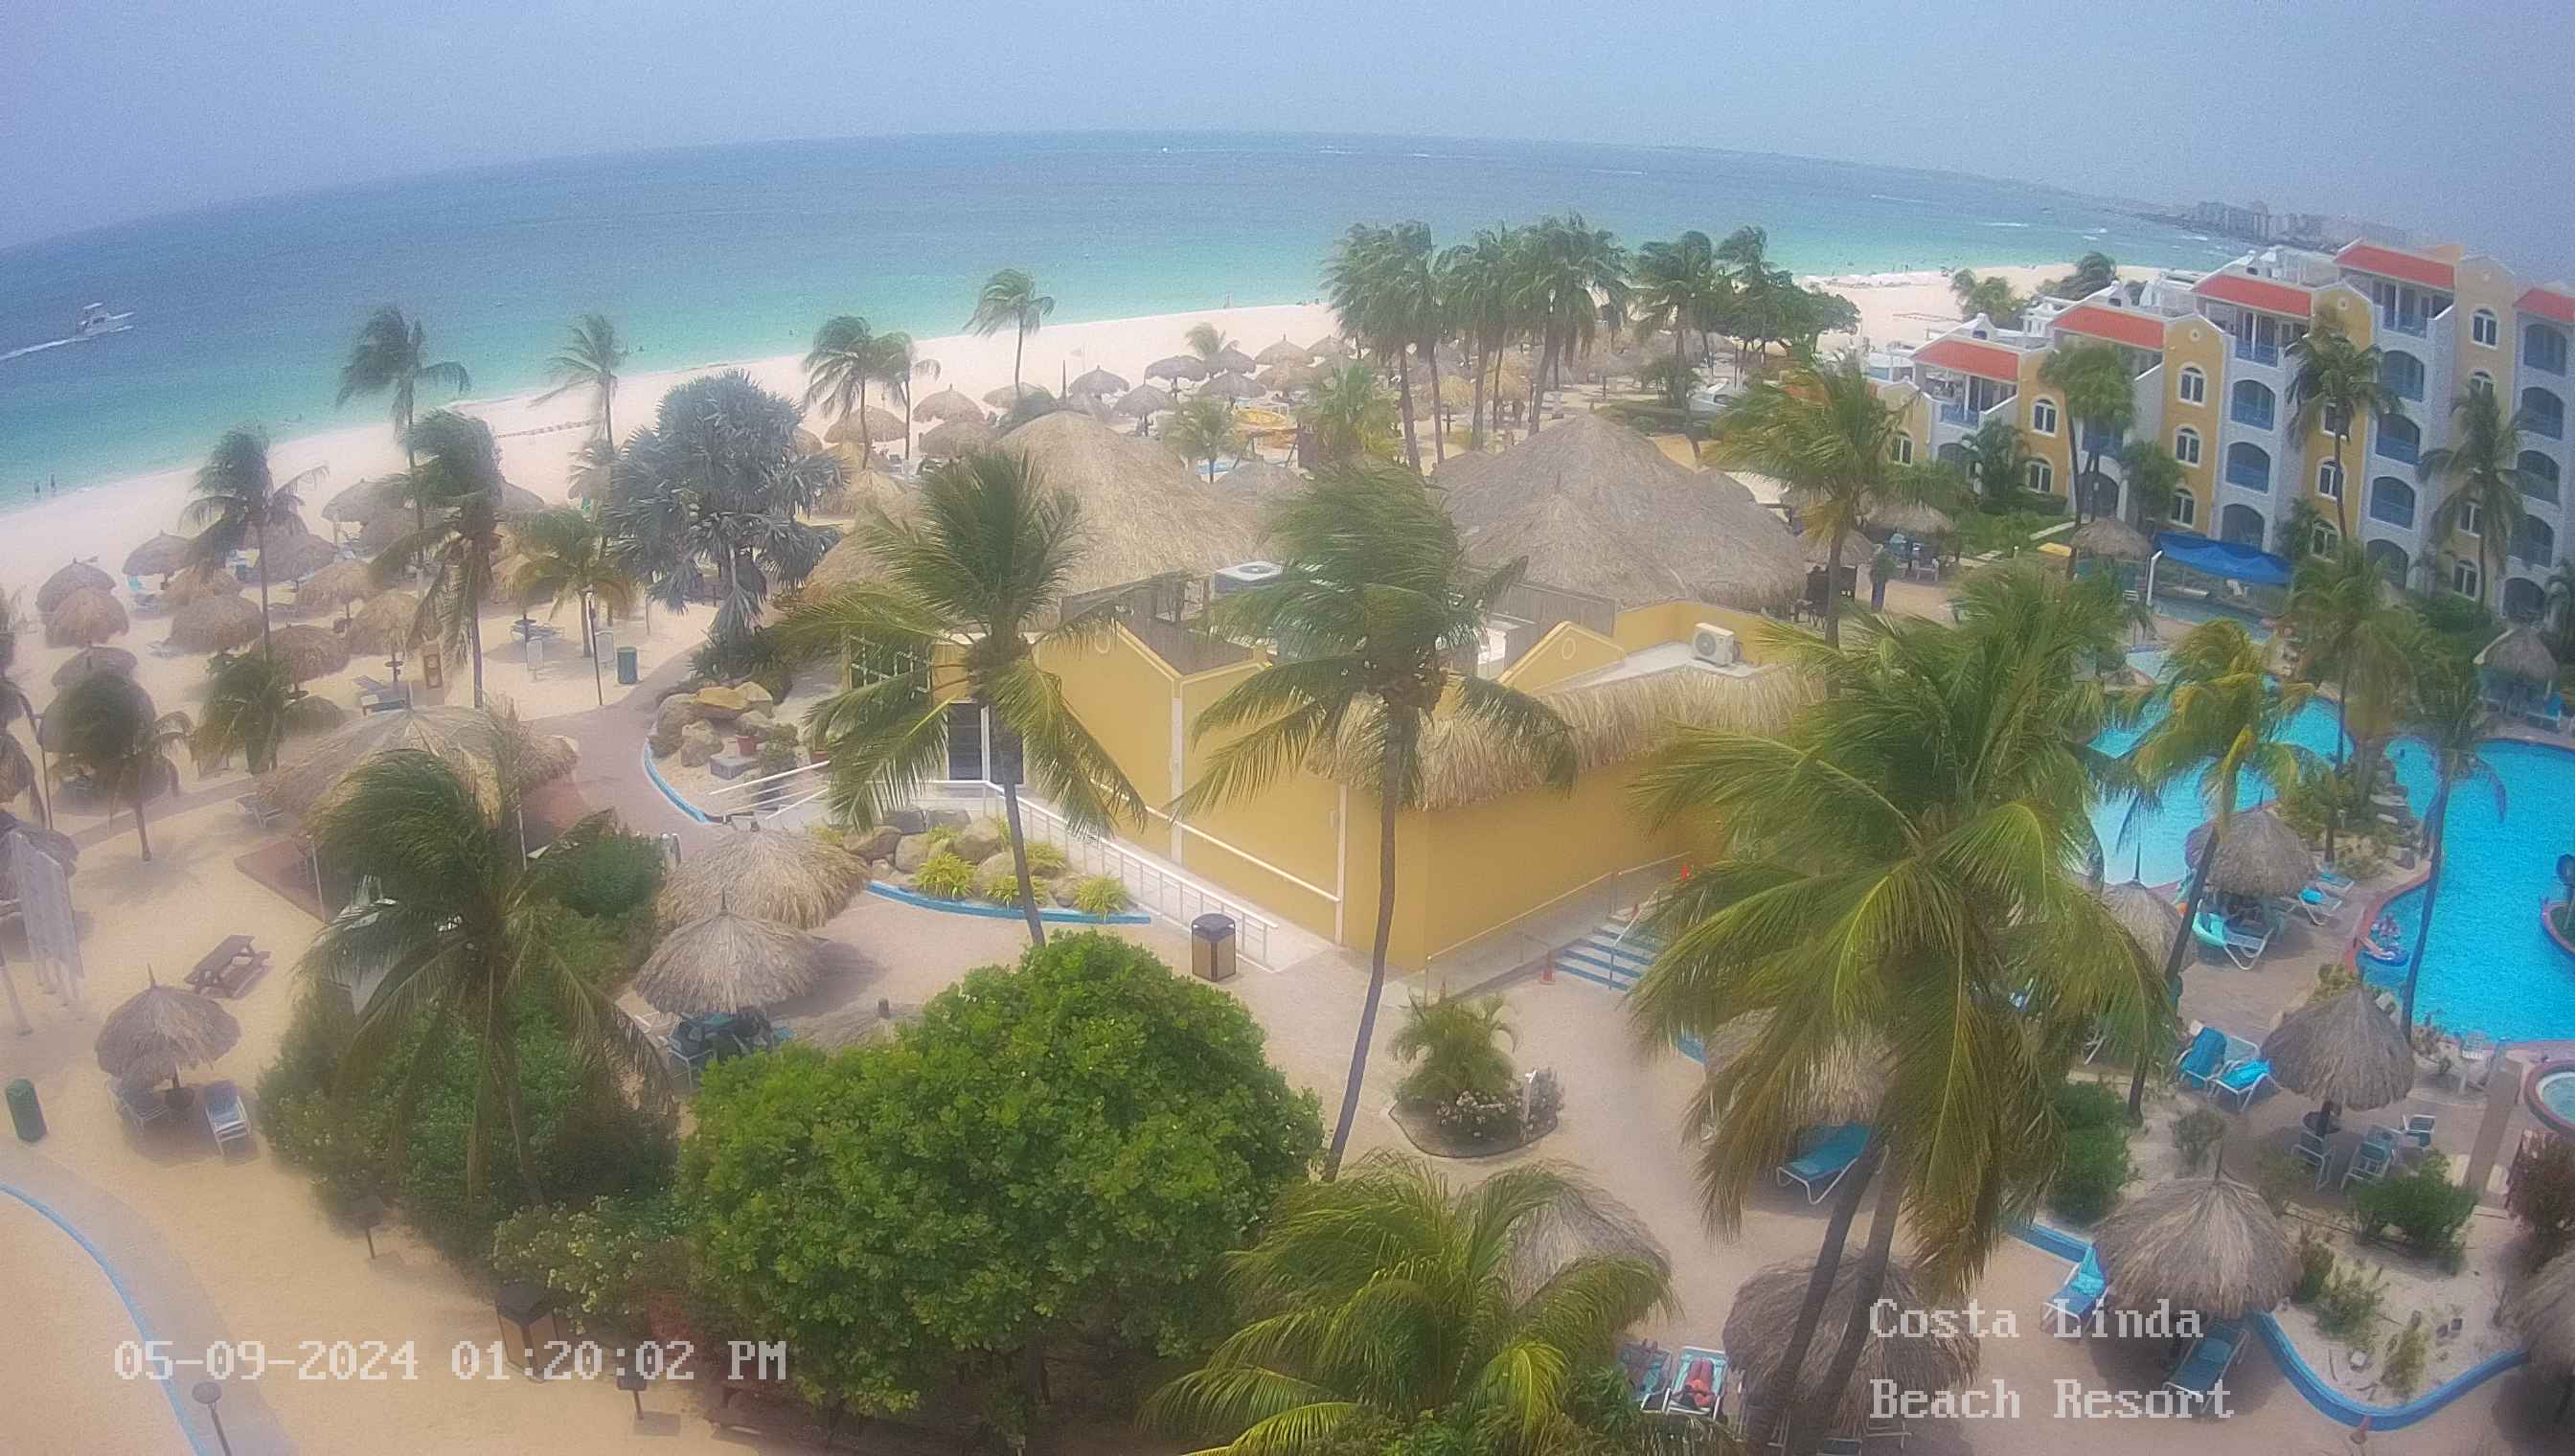 Webcam Costa Linda Beach Resort - Beach View